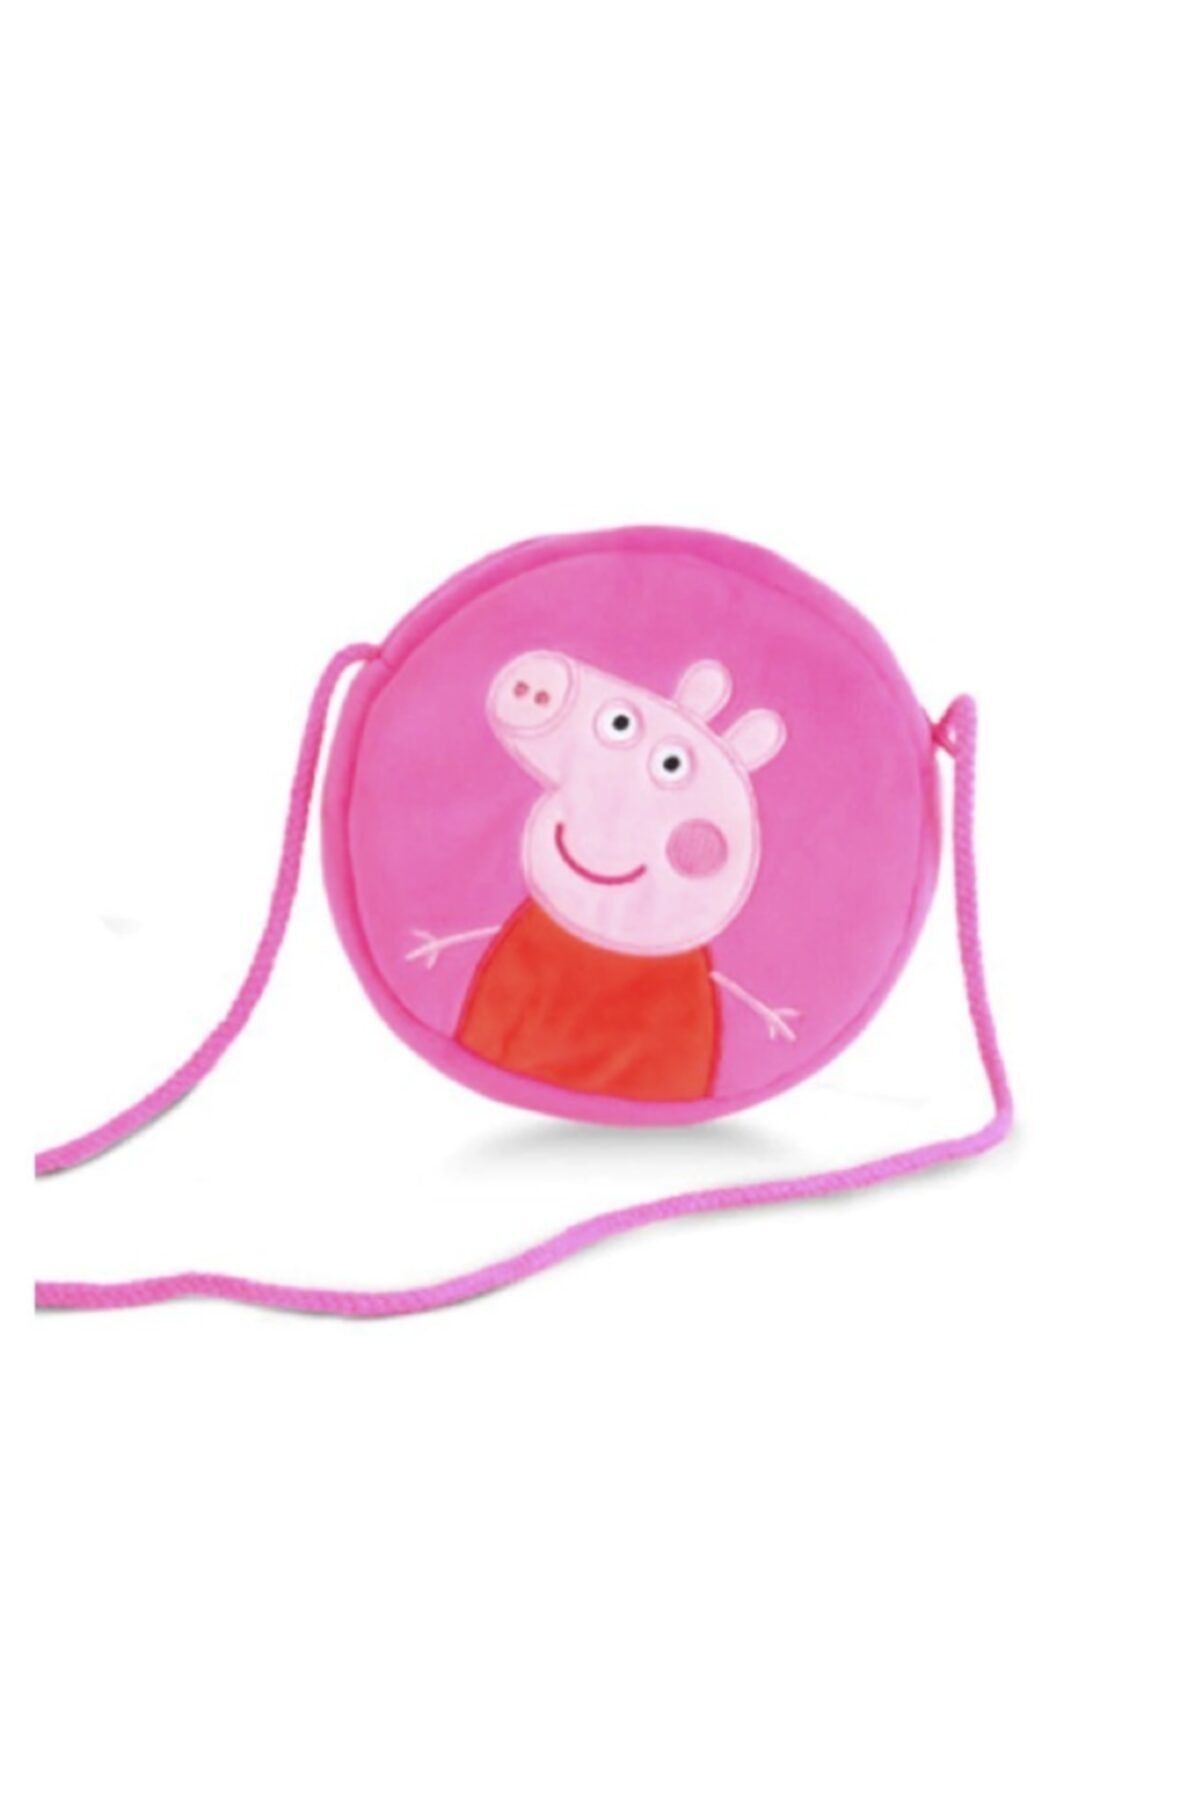 Peppa (ÖZEL ÇANTA) Pig Karakter Çocuk Çantası , Pembe Pig Çantası